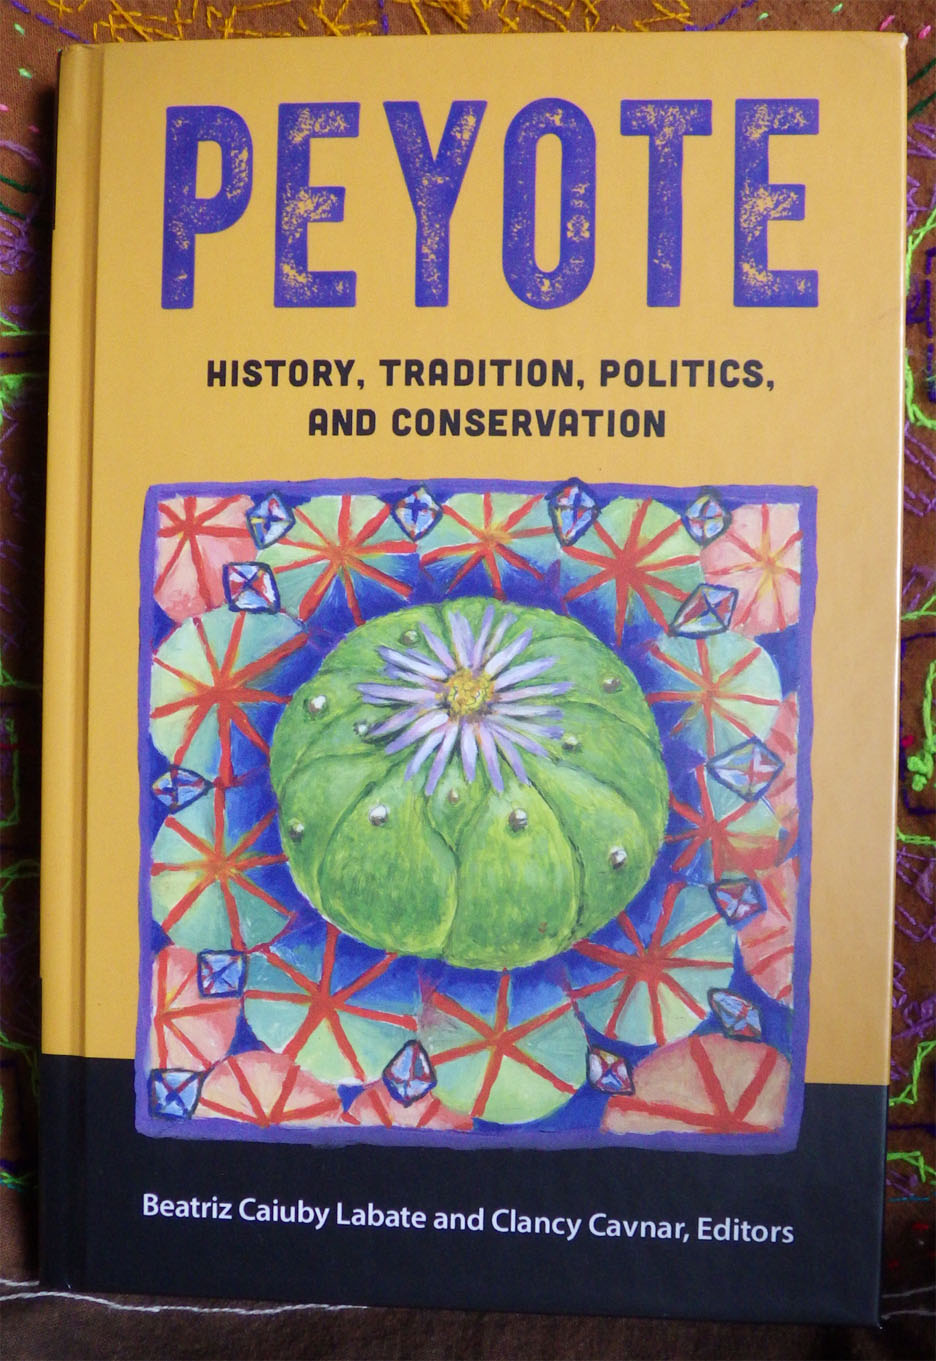 peyote-book-cover